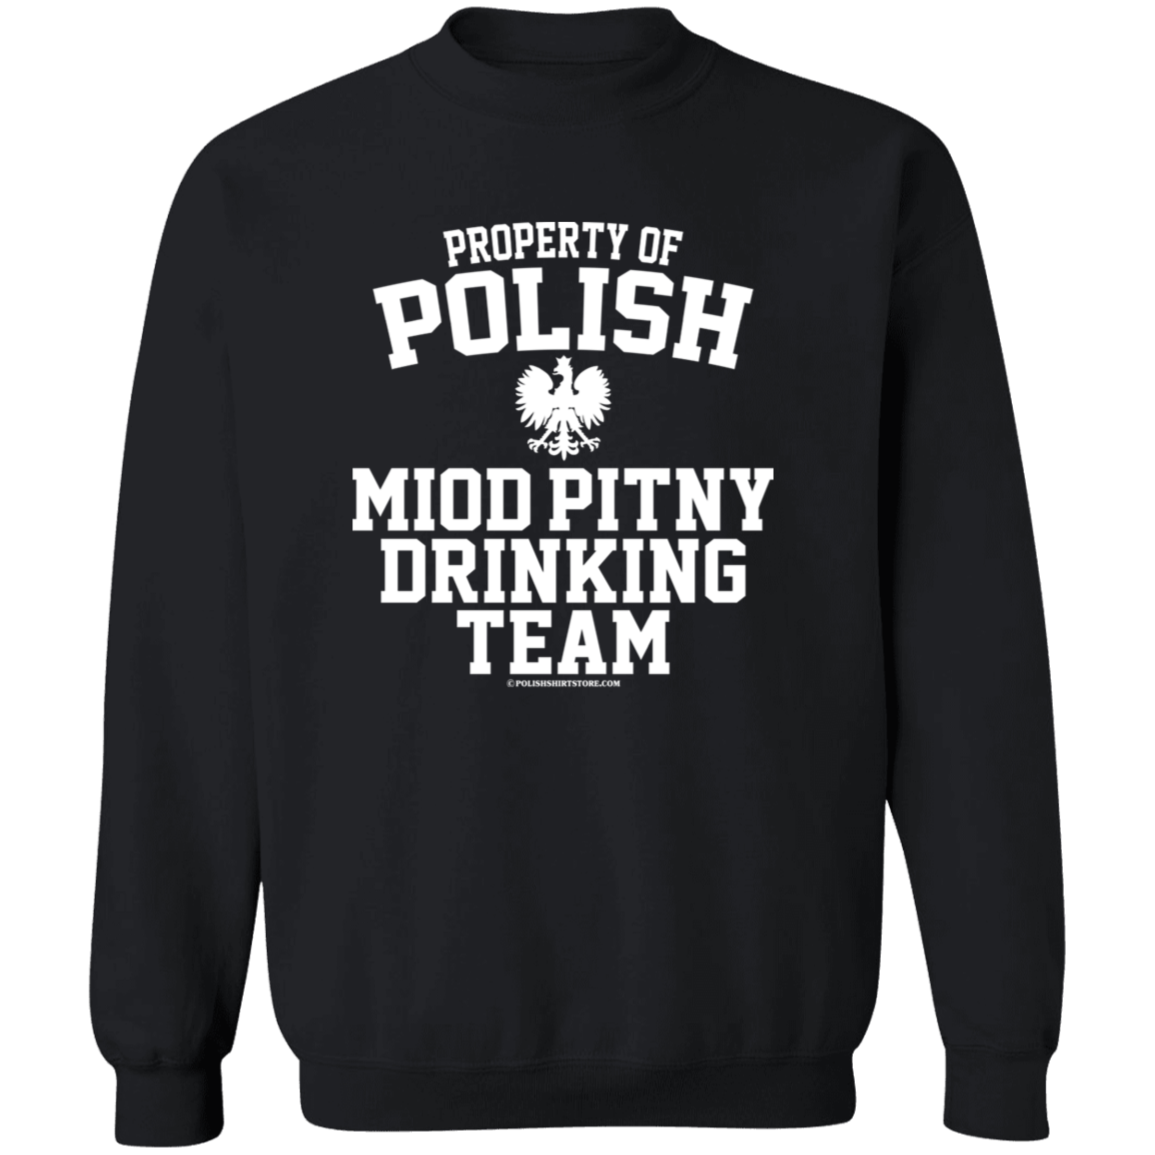 Property of Polish Miod Pitny Drinking Team Apparel CustomCat G180 Crewneck Pullover Sweatshirt Black S